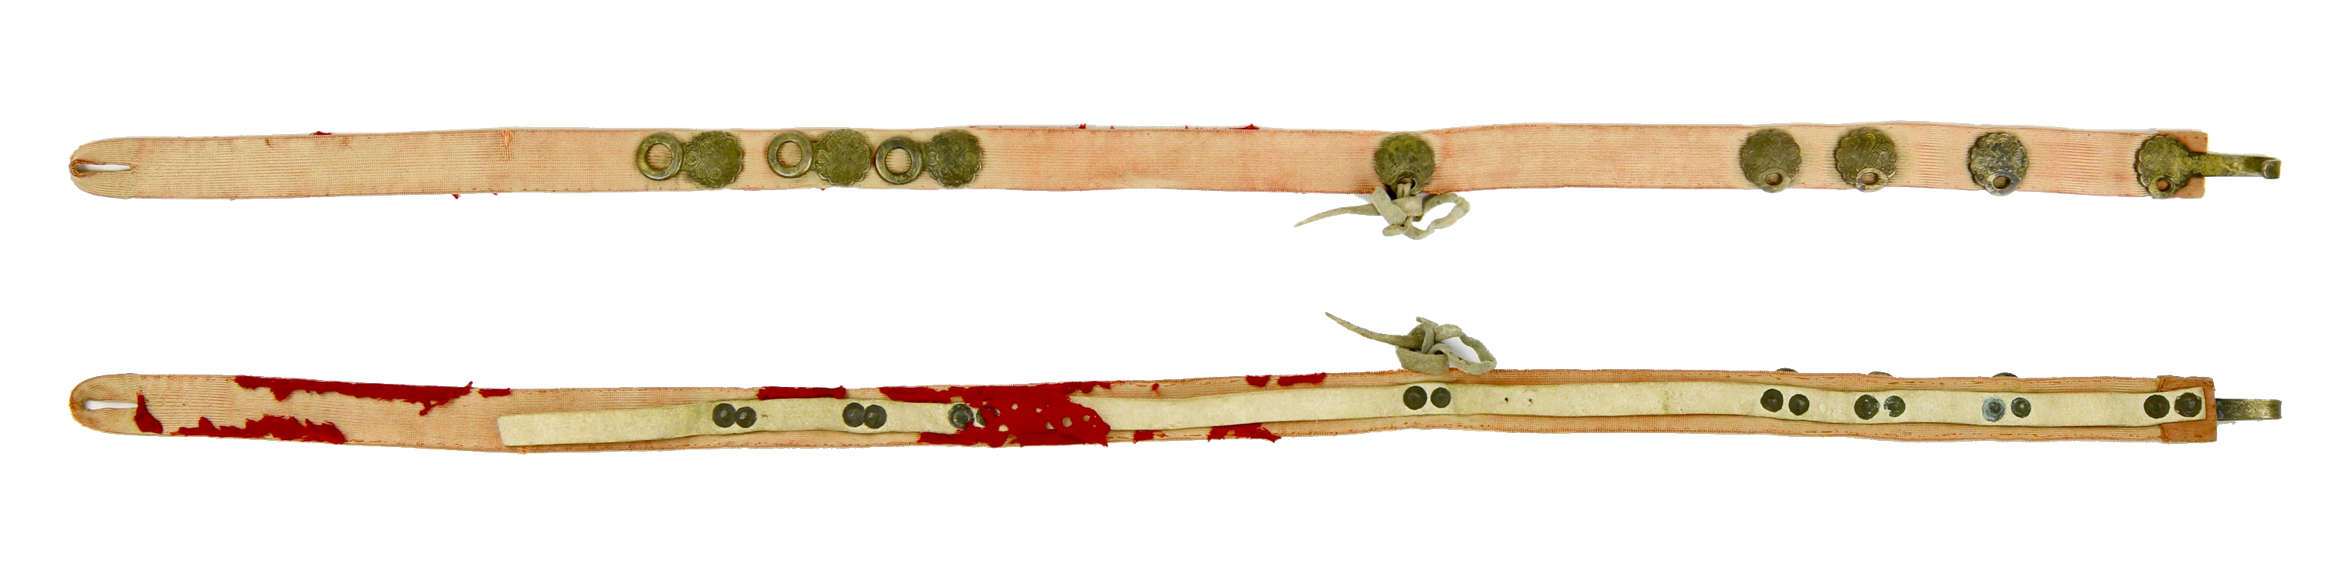 Qing dynasty archer's belt